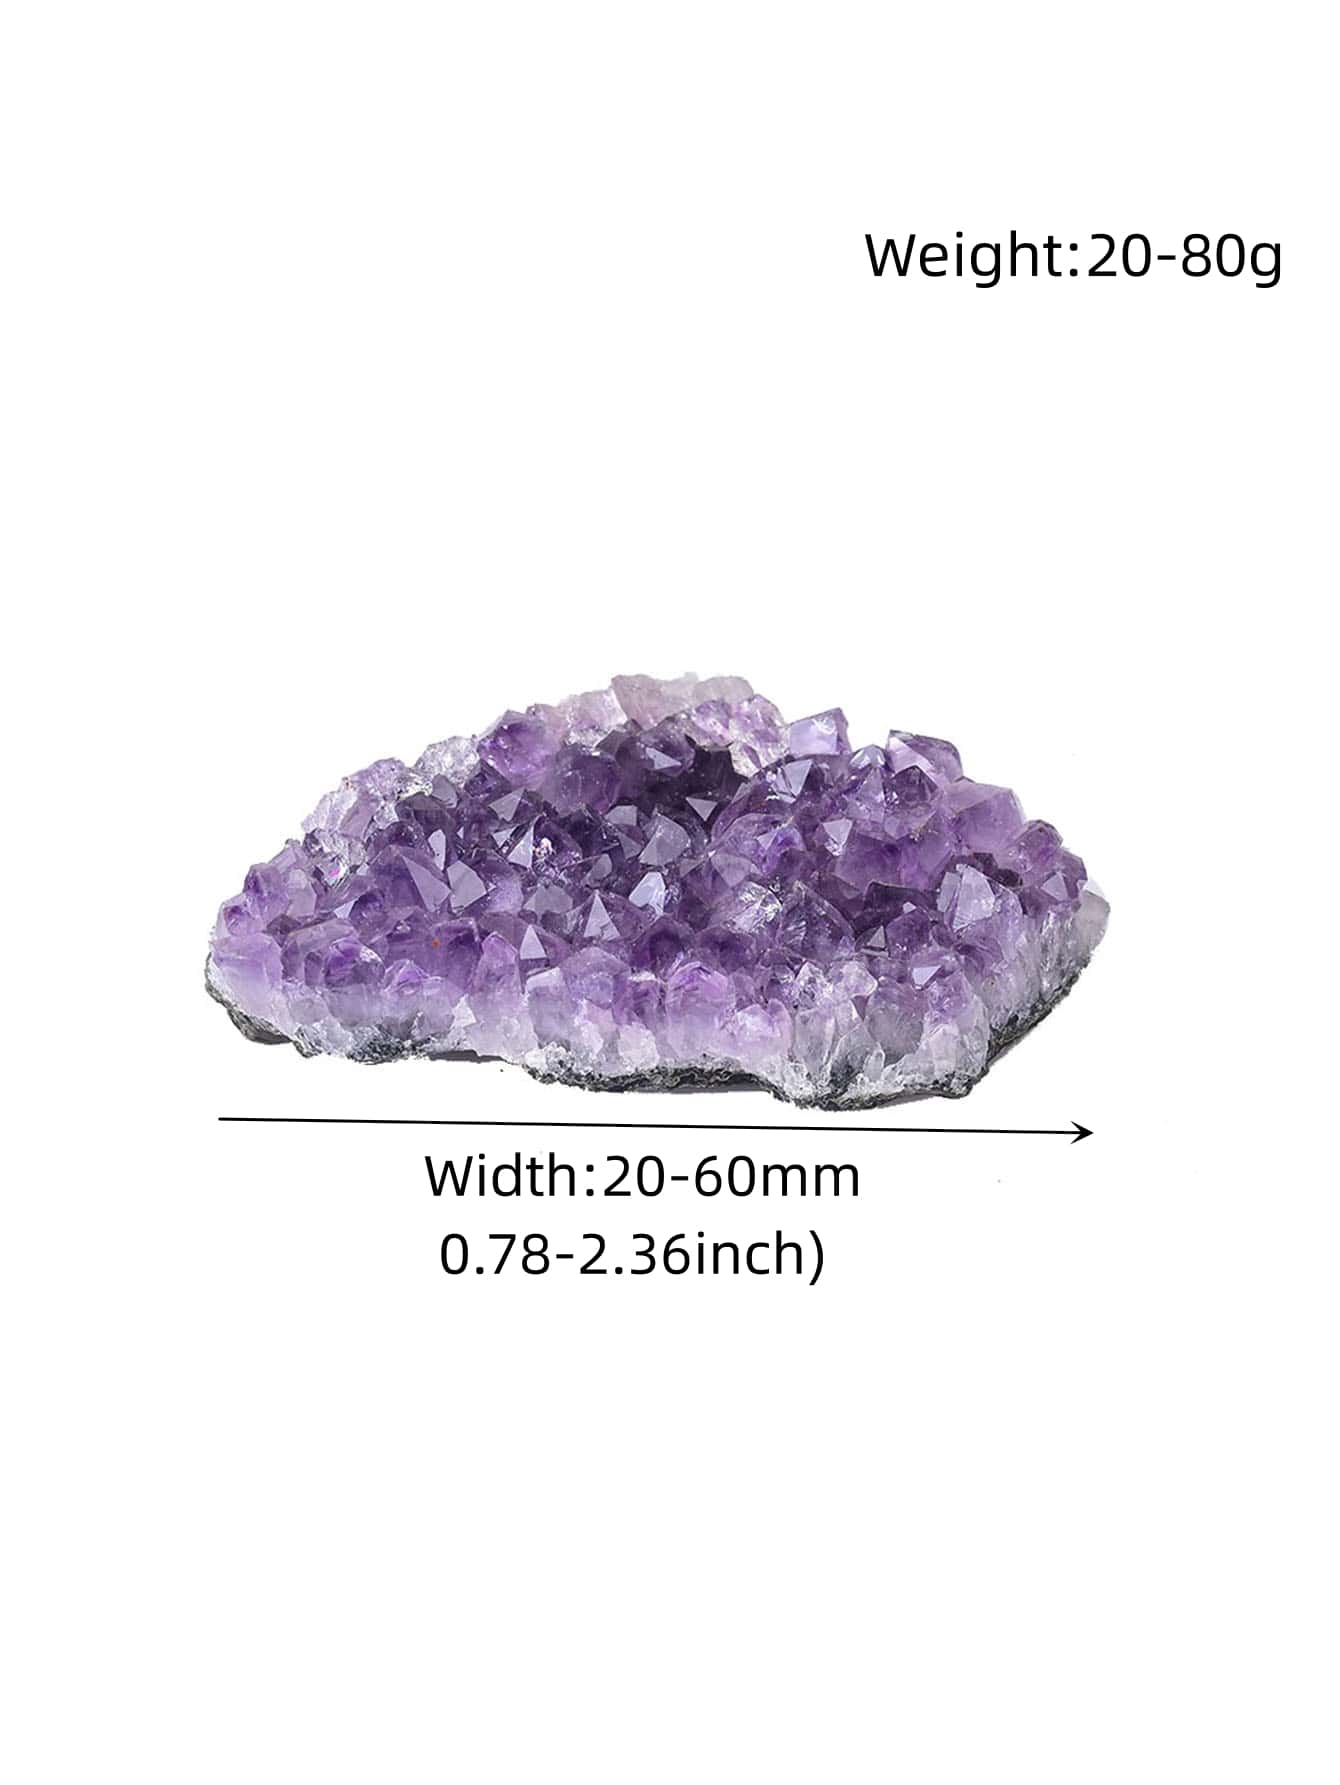 Natural Amethyst Crystal Cluster Quartz Raw Crystals Healing Stone - 1pc